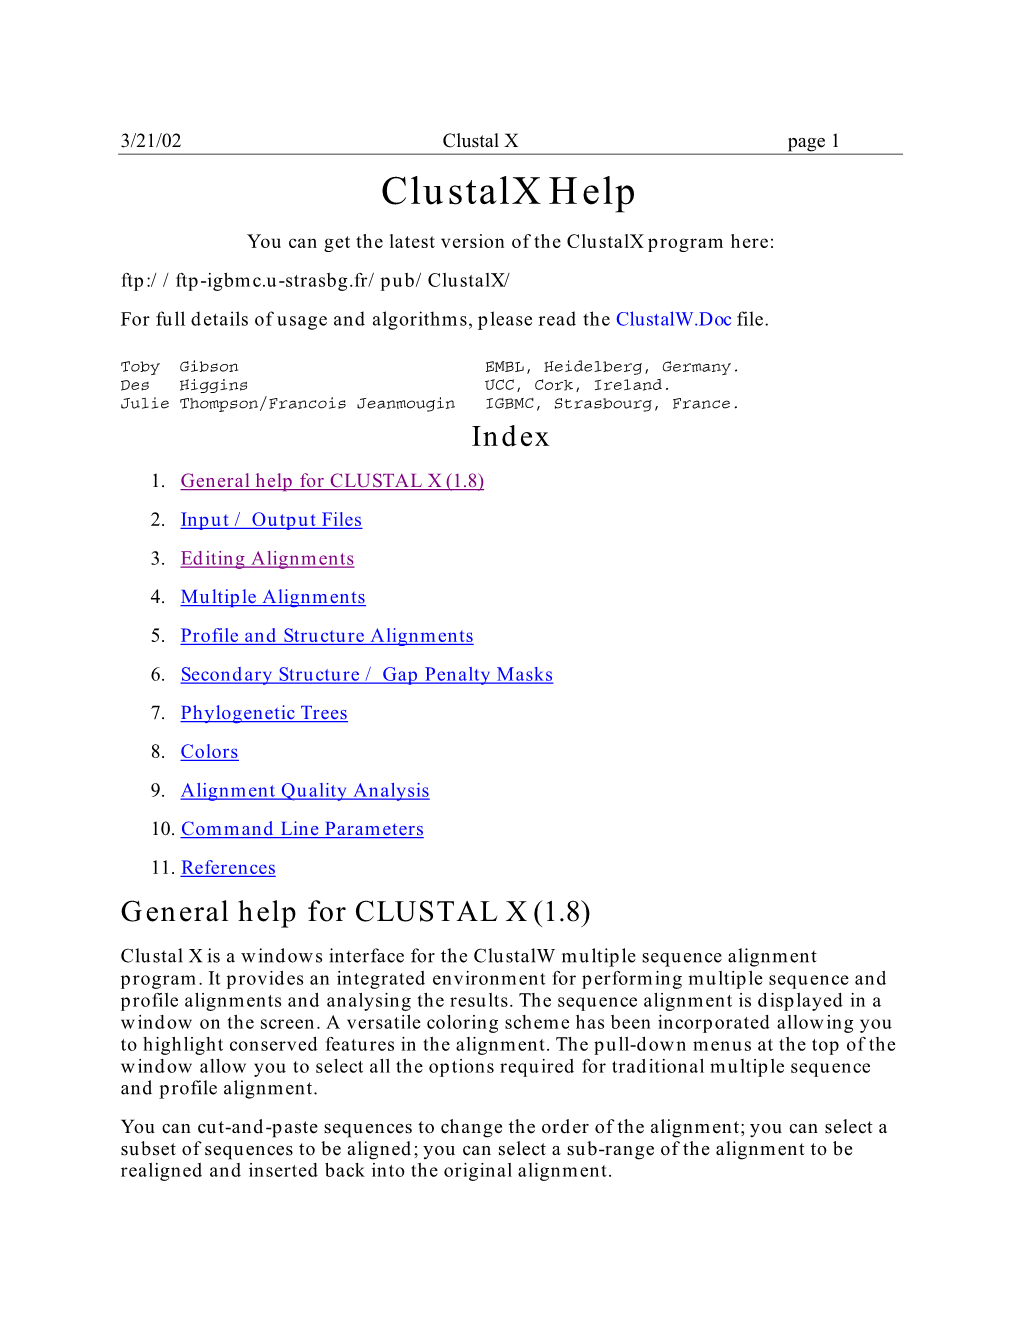 Clustalx Help